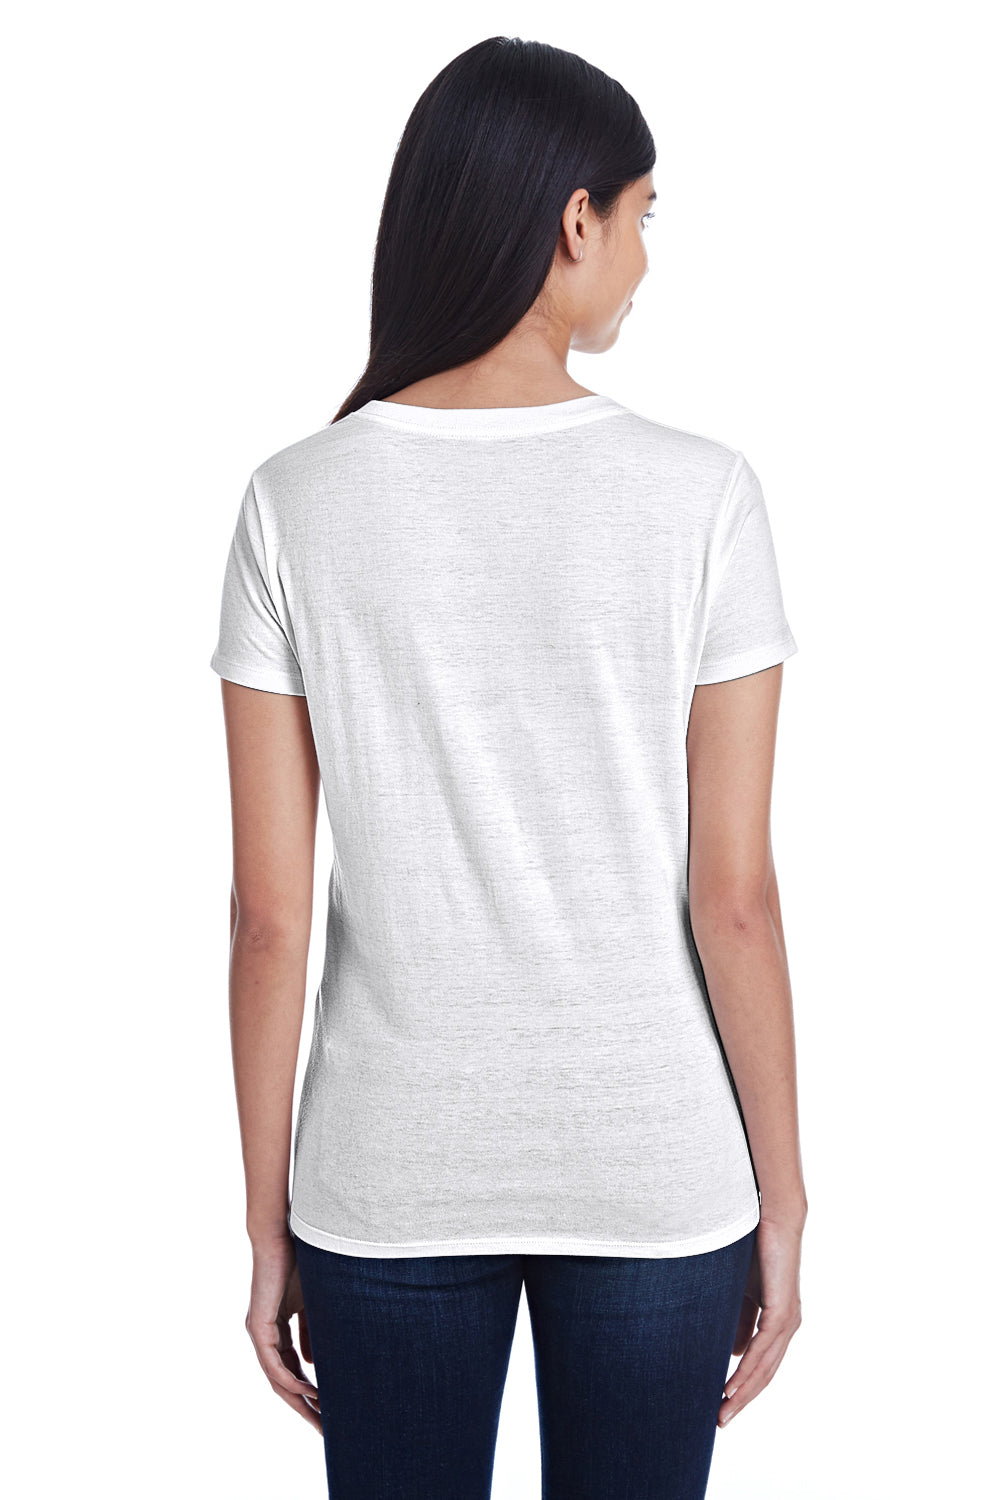 Threadfast Apparel 252RV Womens Short Sleeve V-Neck T-Shirt White Back